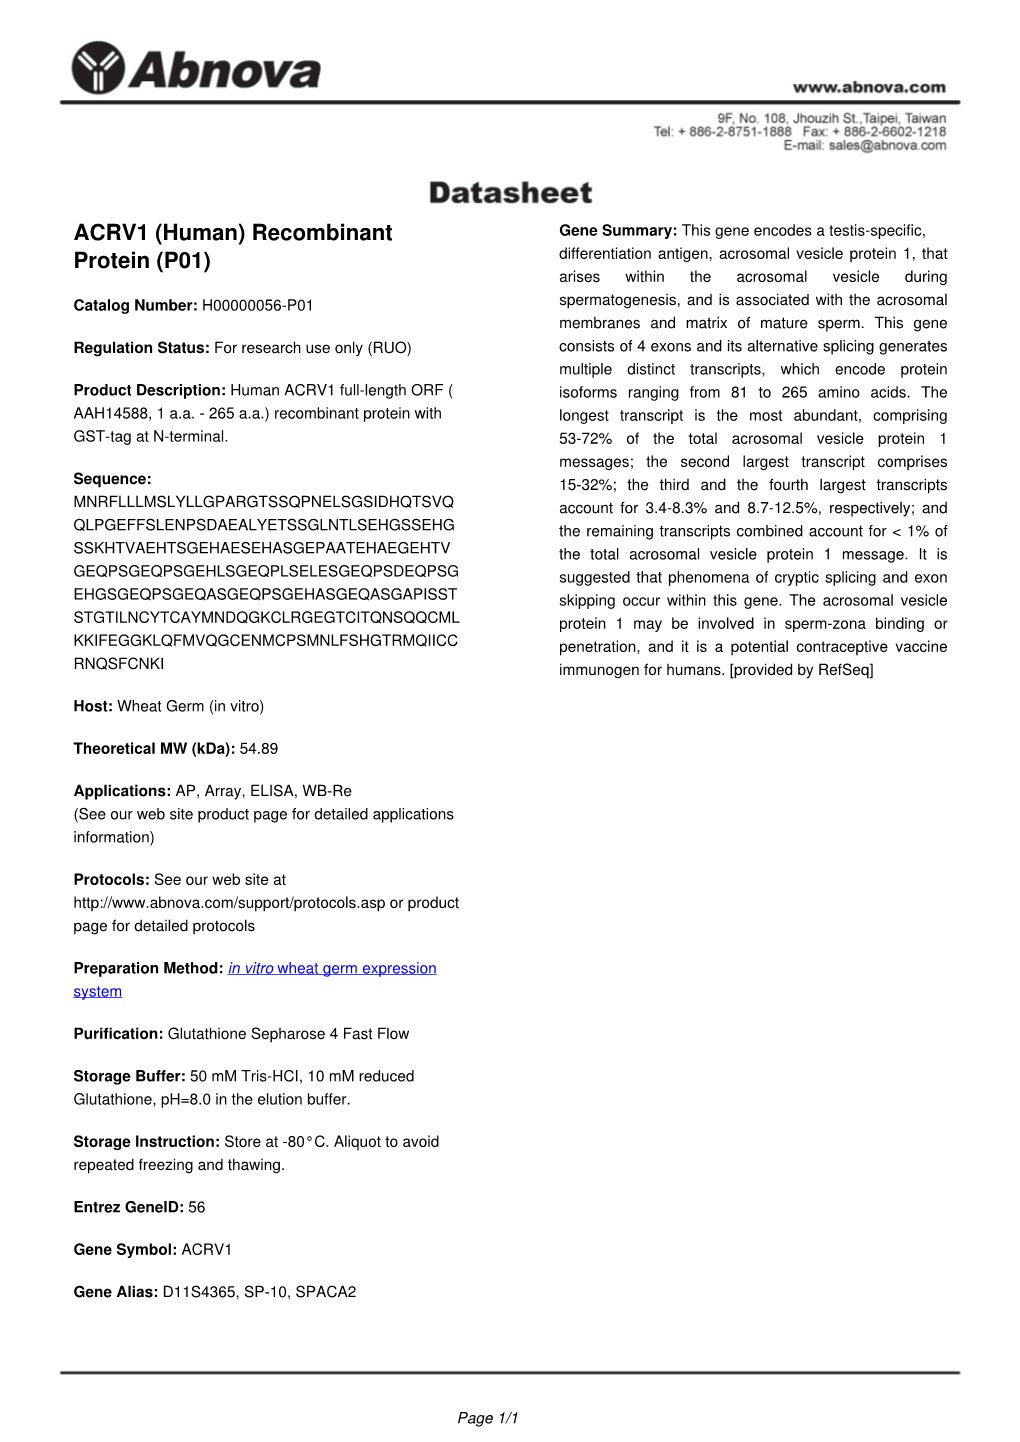 ACRV1 (Human) Recombinant Protein (P01)